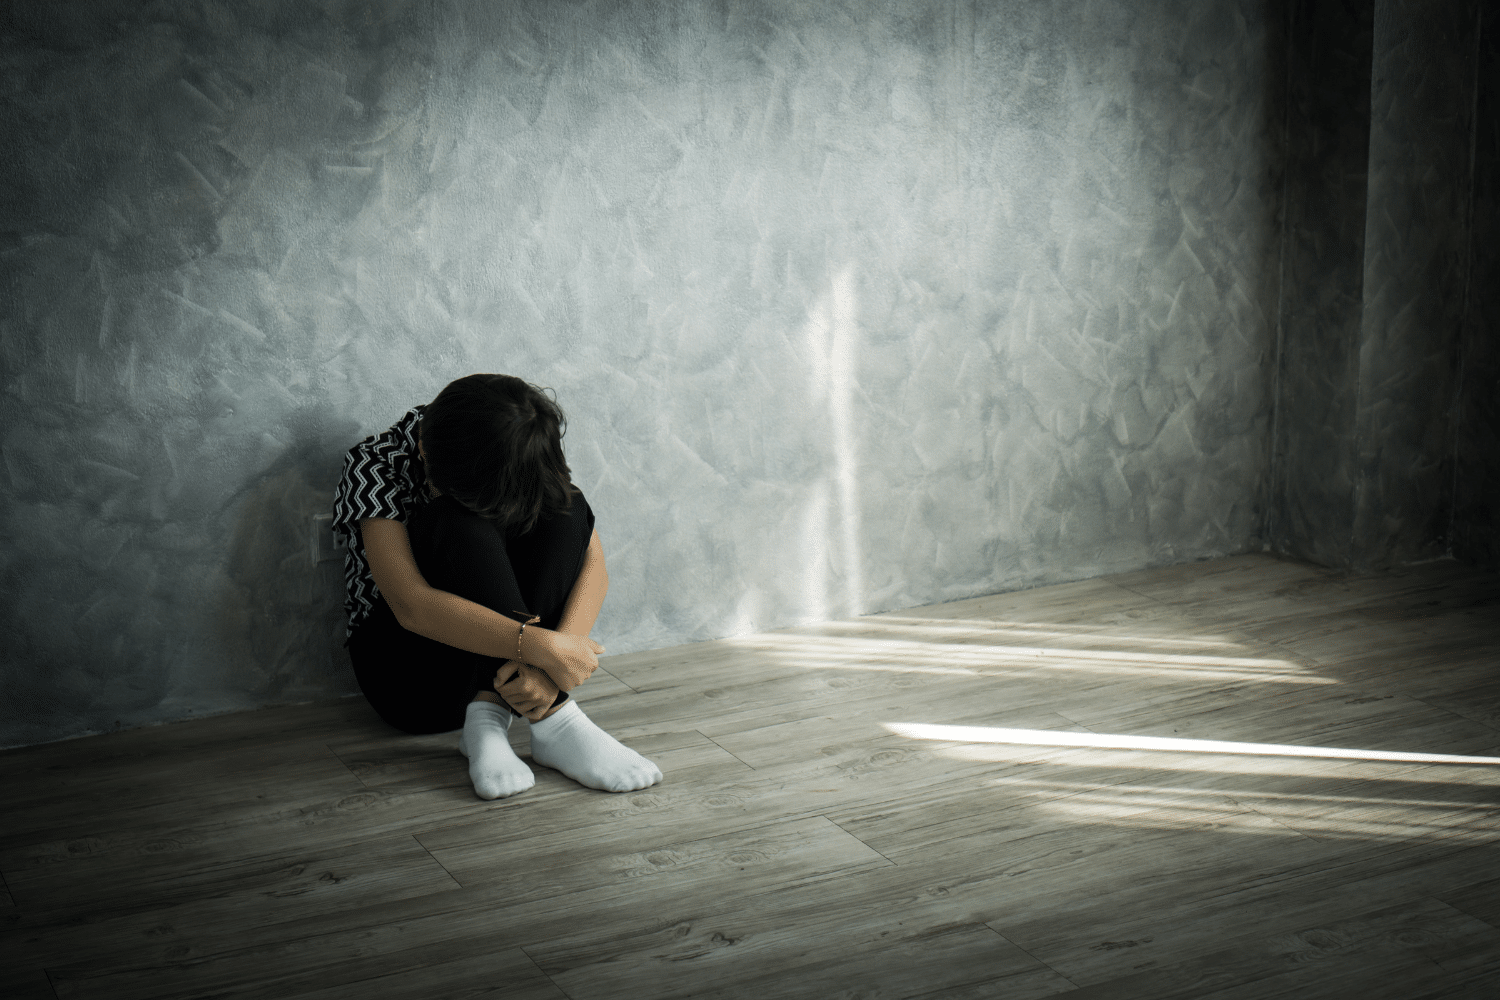 suicide prevention in adolescents